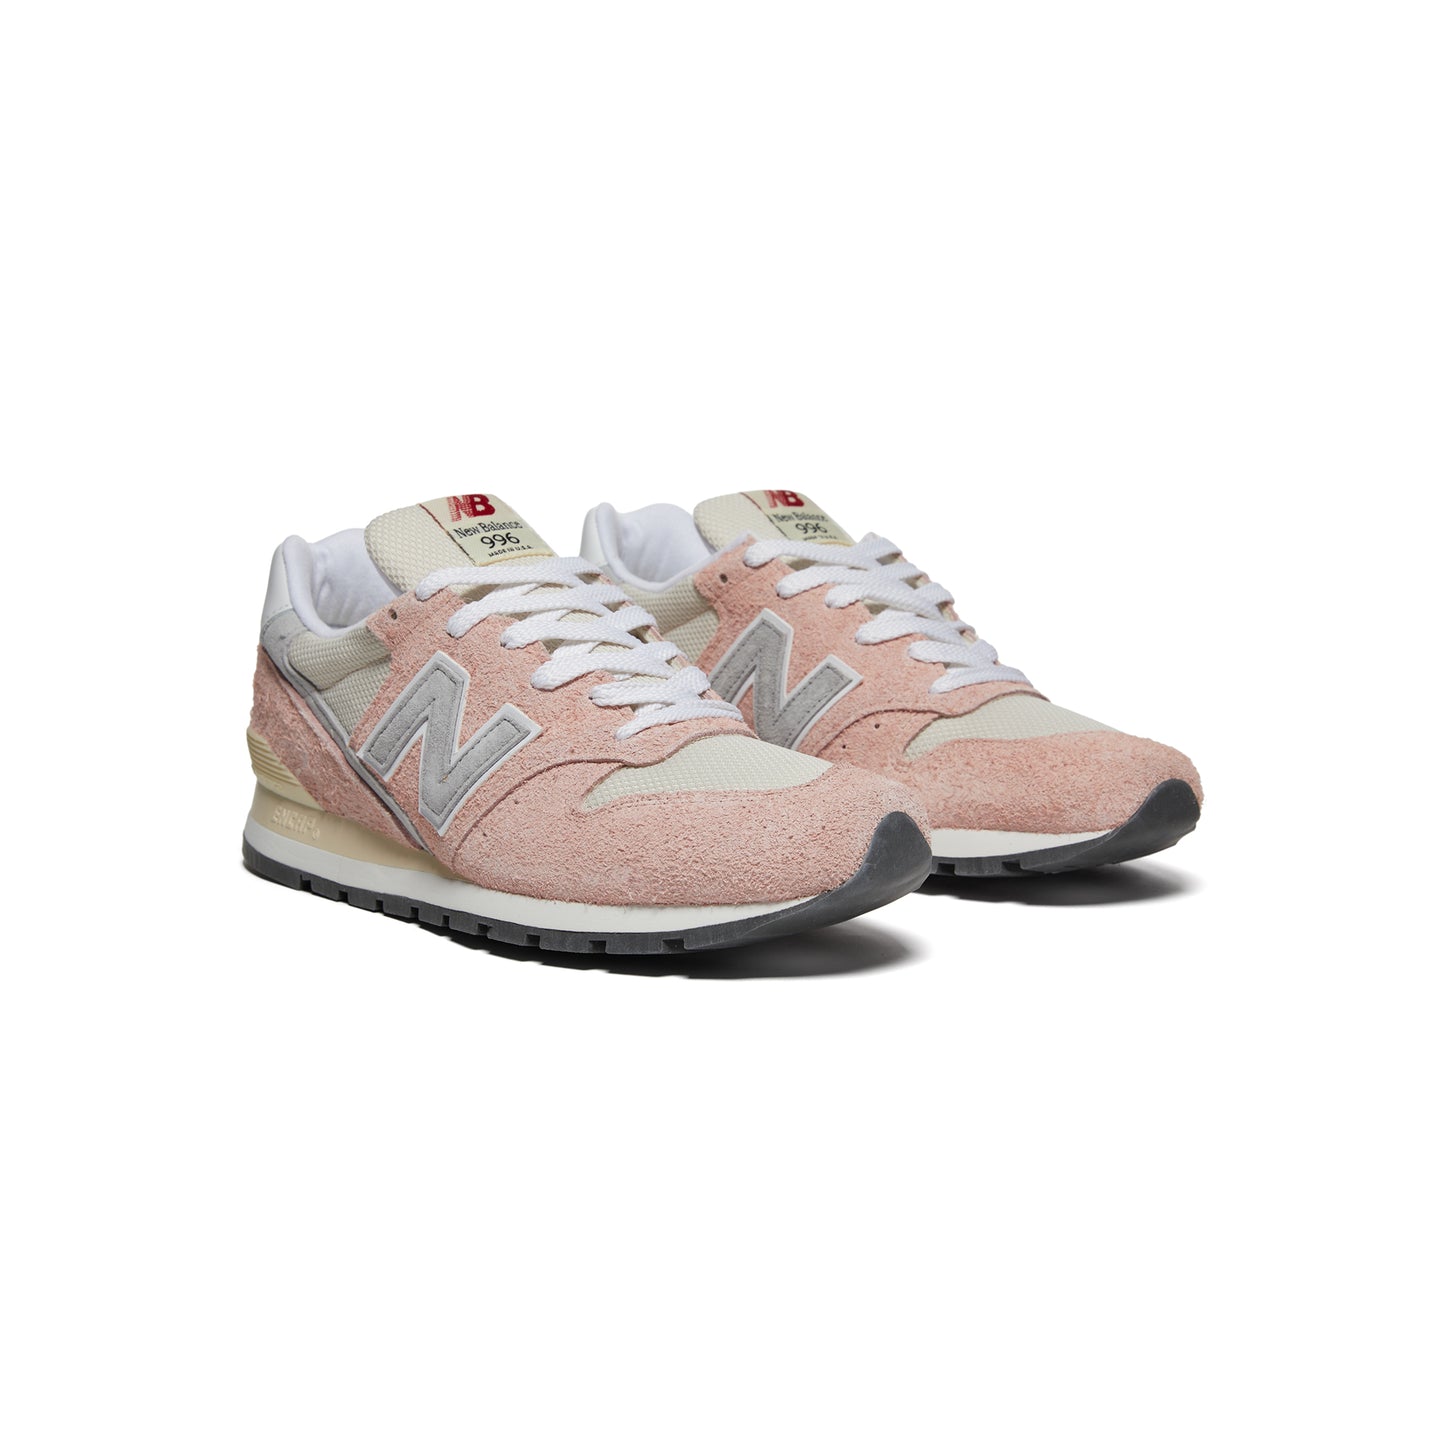 New Balance 996 (Pink Haze/Silver)